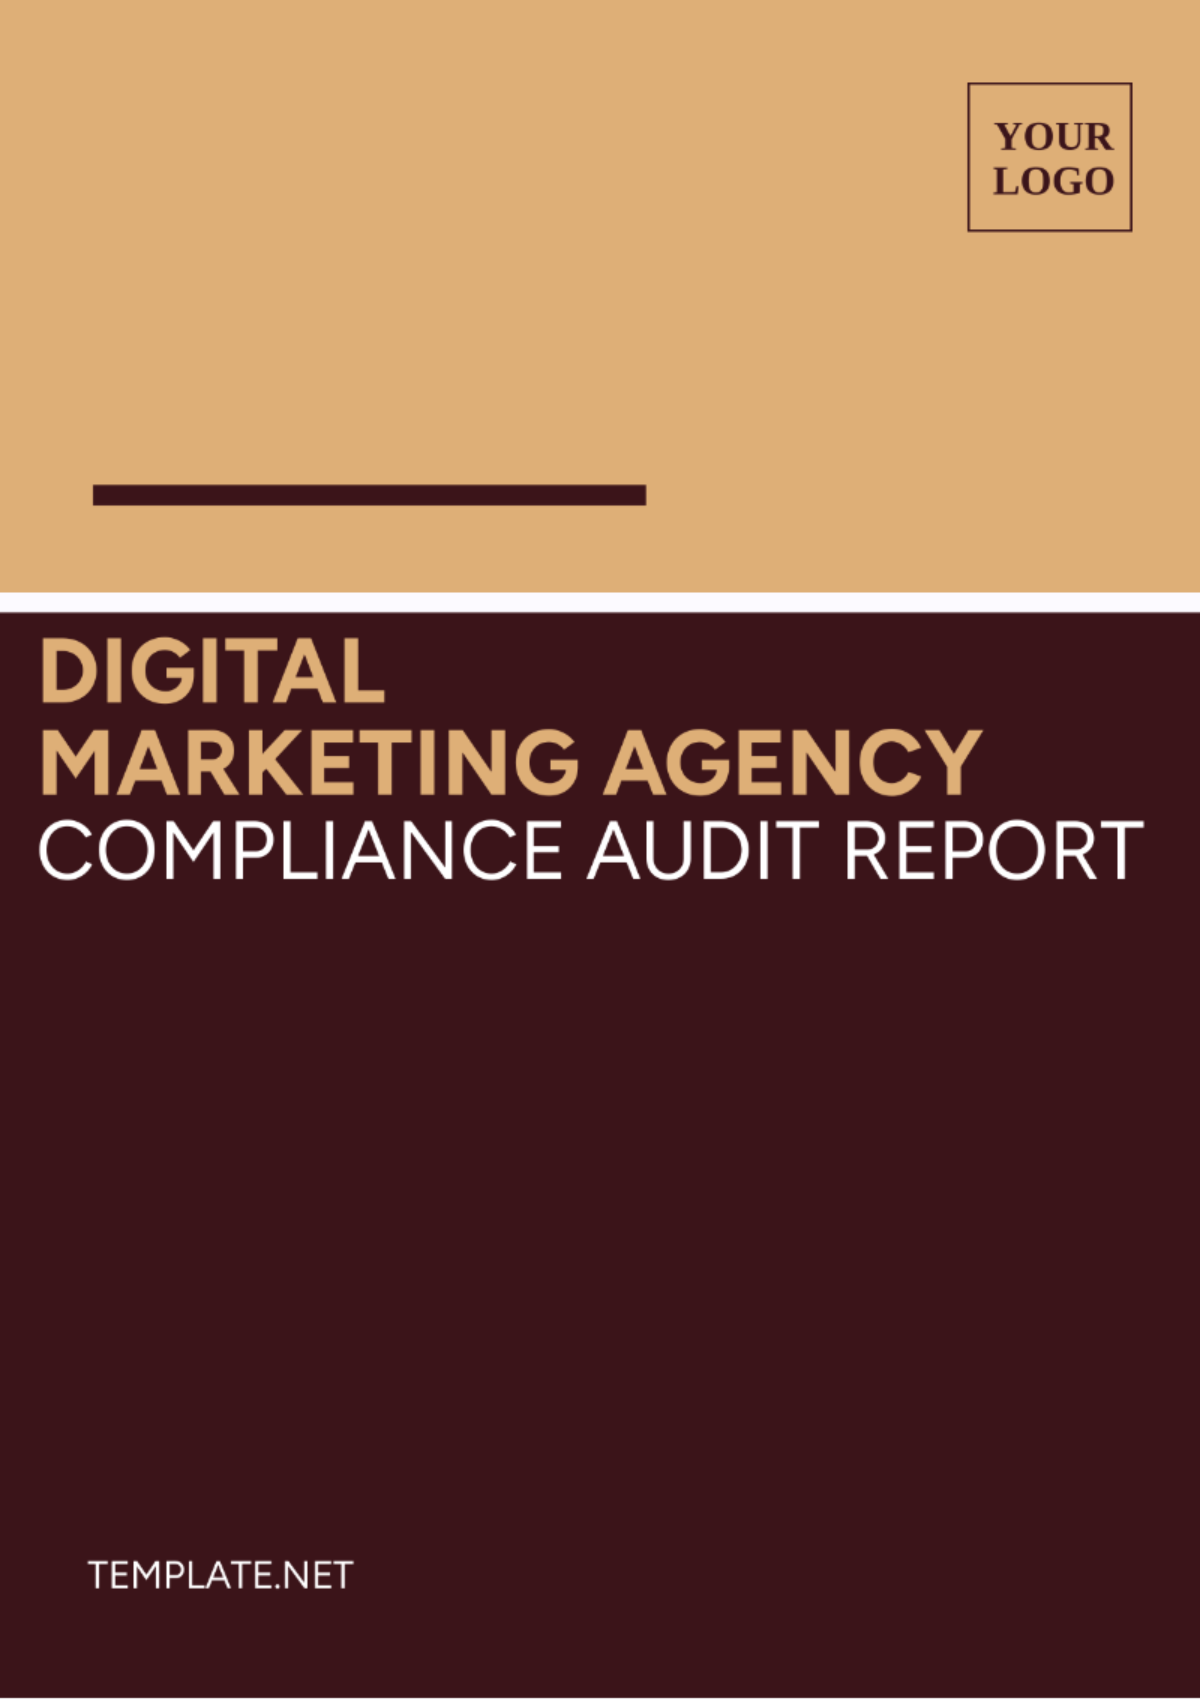 Digital Marketing Agency Compliance Audit Report Template